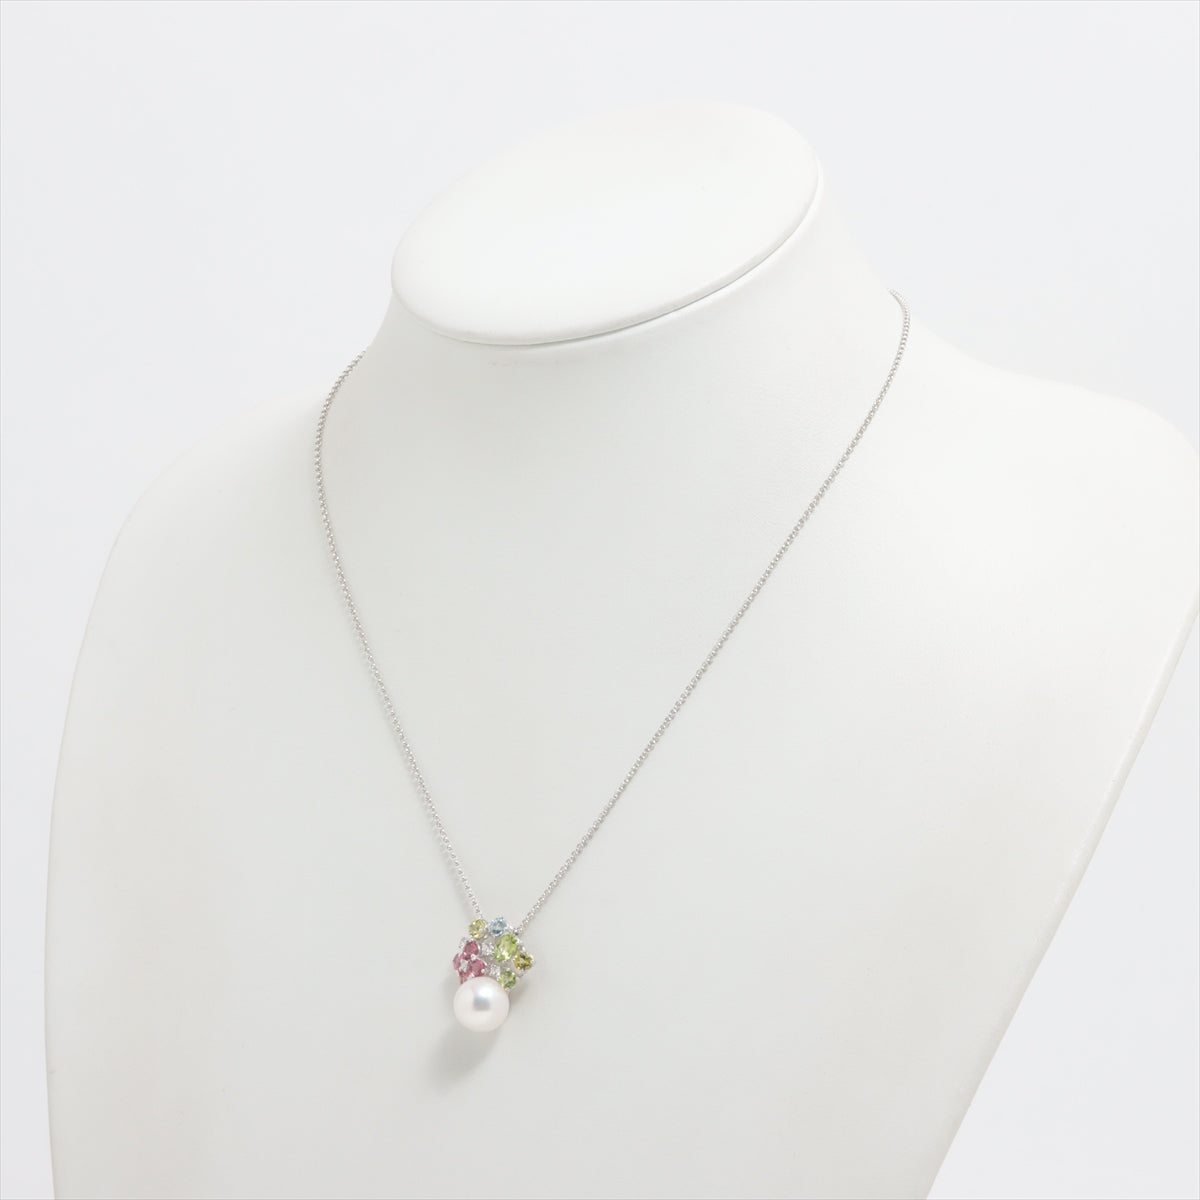 TASAKI Pearl Colored stone Necklace K18WG 7.5g 0.13 Approx. 10.0 mm diamond